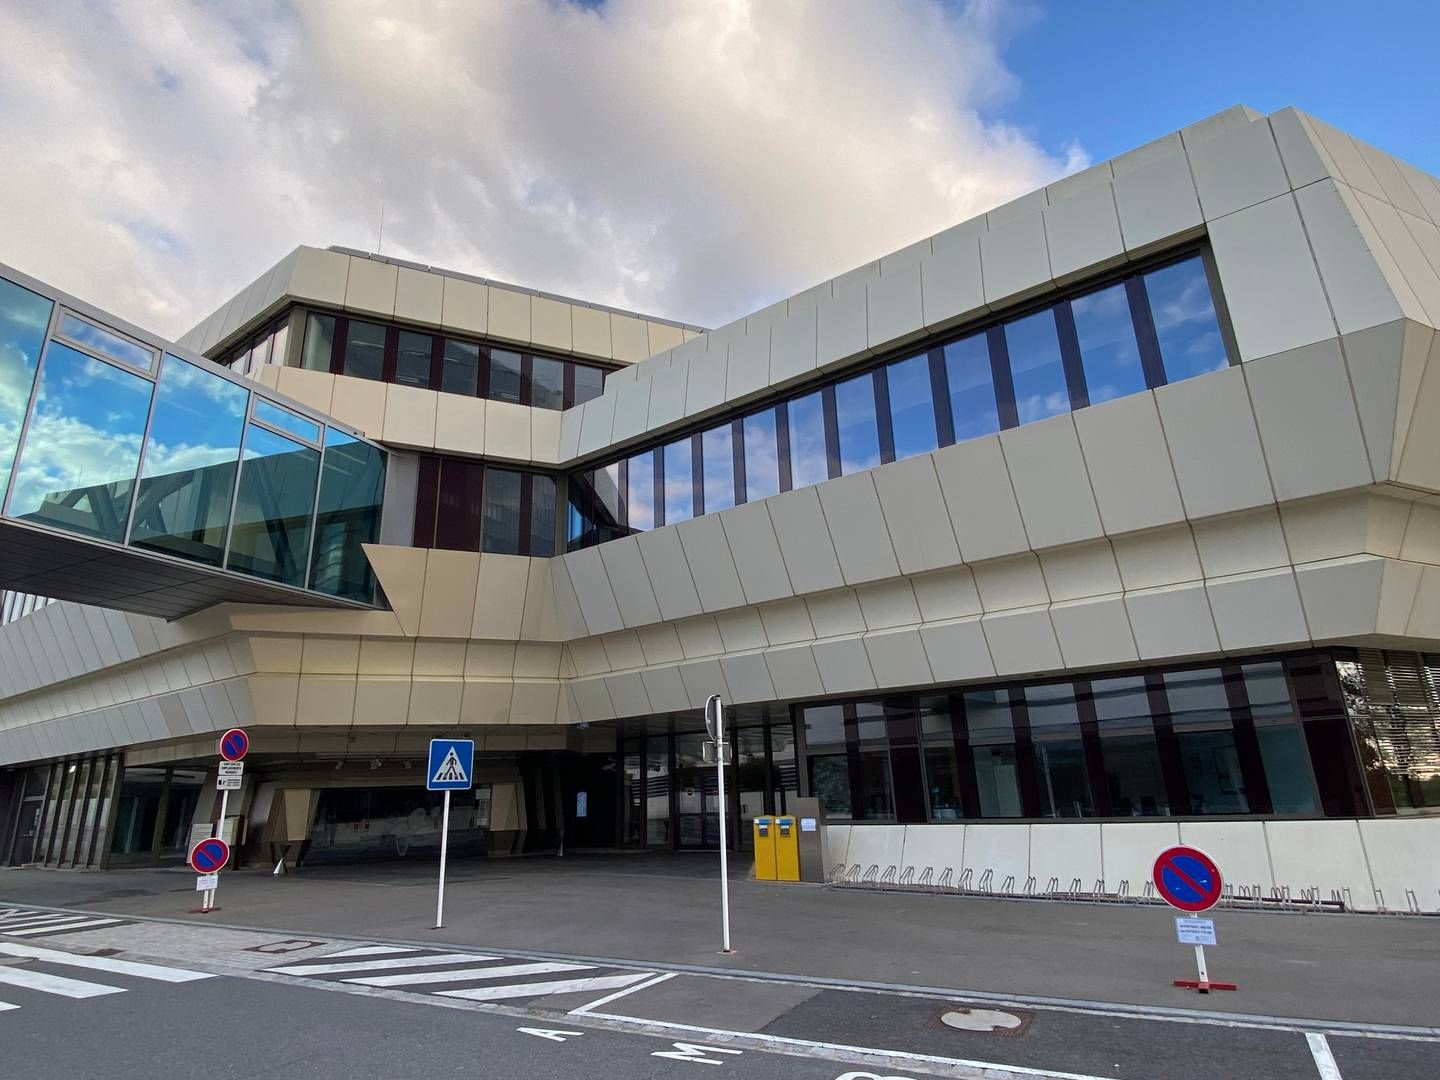 LUXEMBOURG: Bygget, som huser Efta-domstolen, ligger i Luxembourg. | Photo: Jonas Berge/NTB